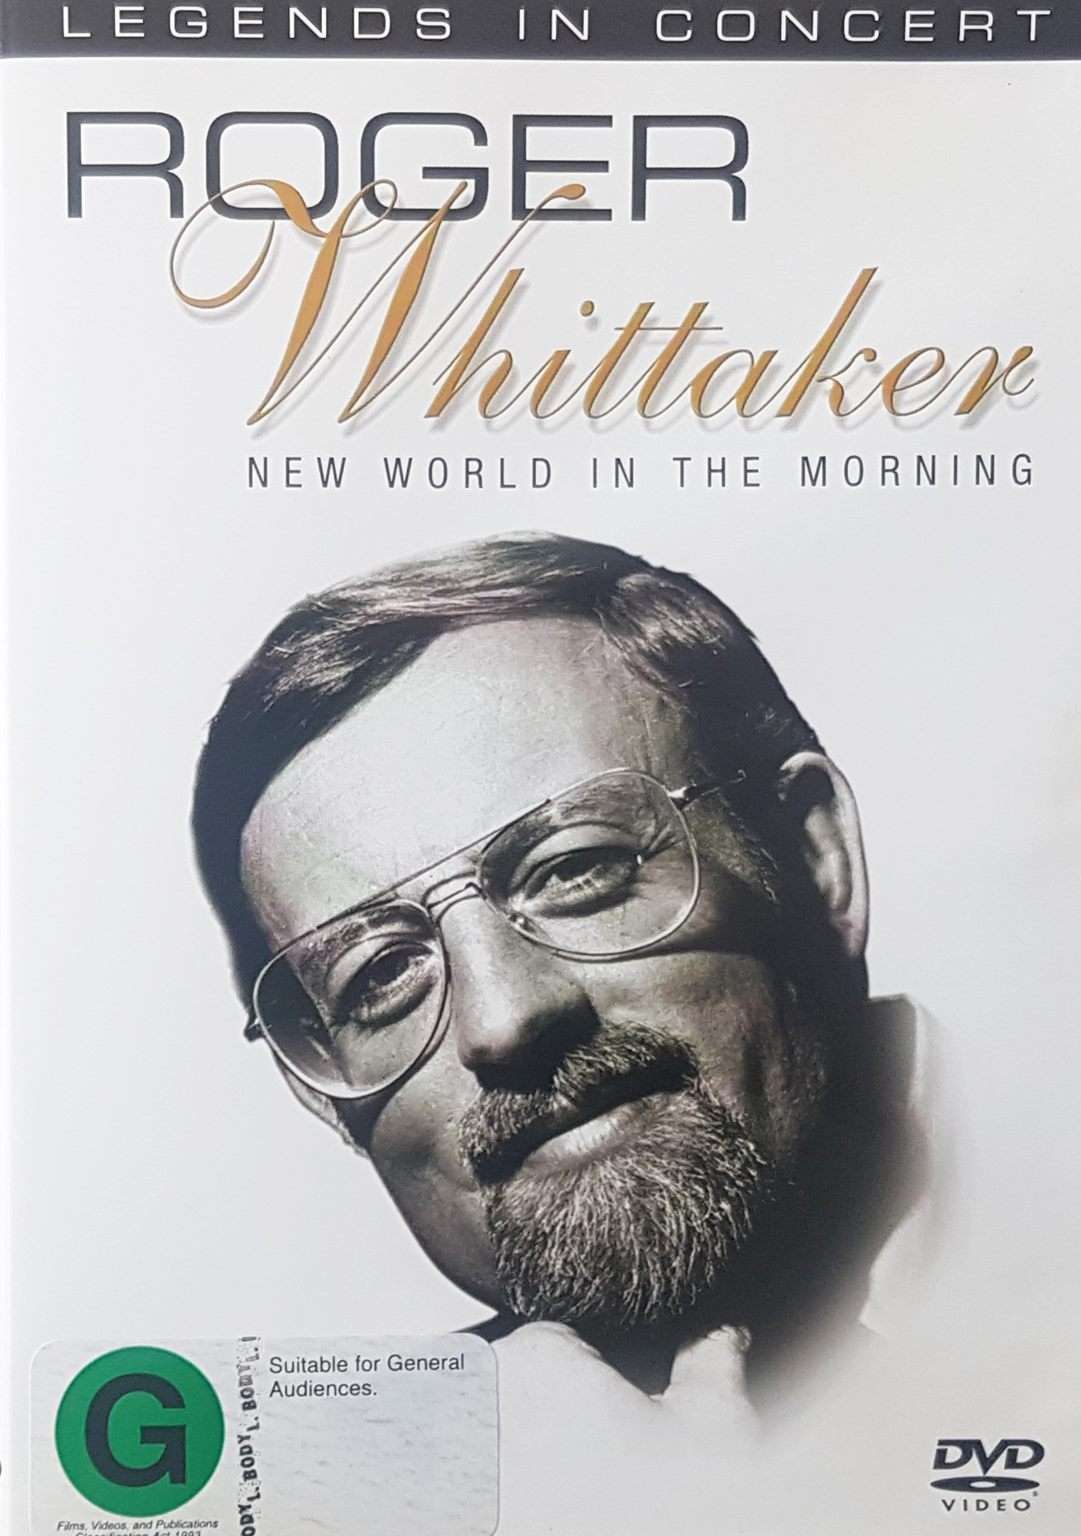 Roger Whittaker: New World in the Morning